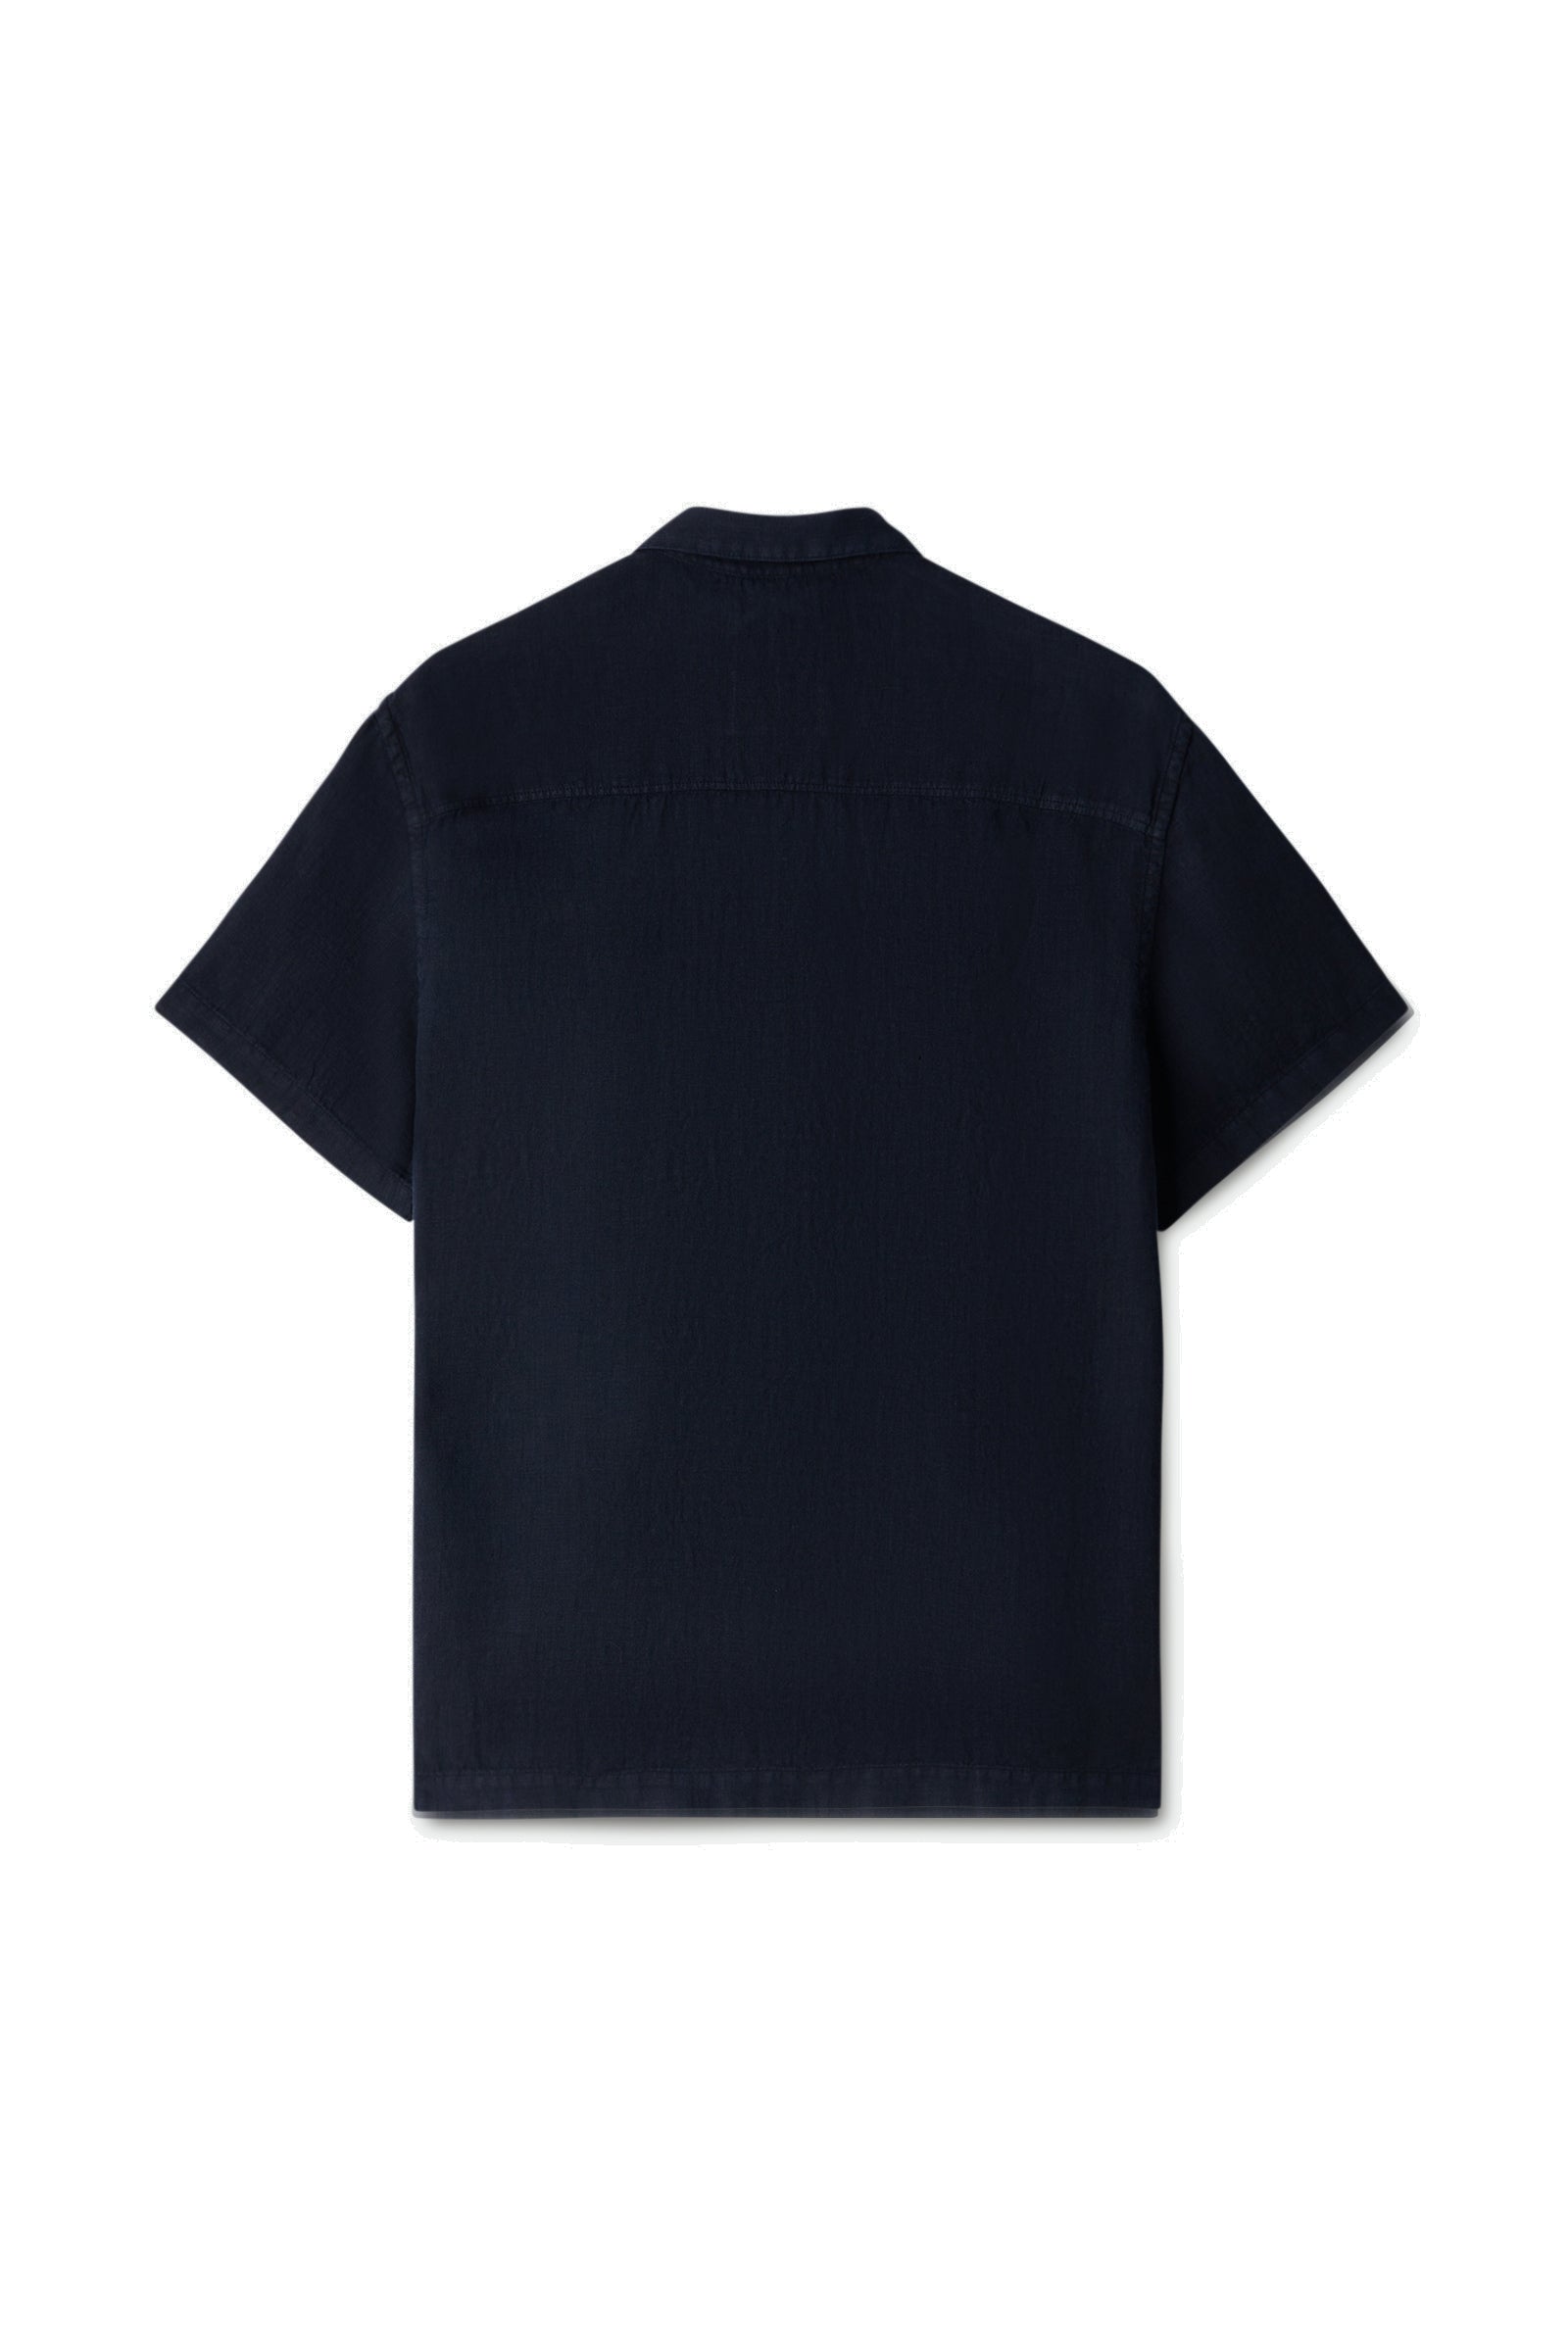 Killian Pk M/C Shirt  in Navy Blue Hemden GAS   